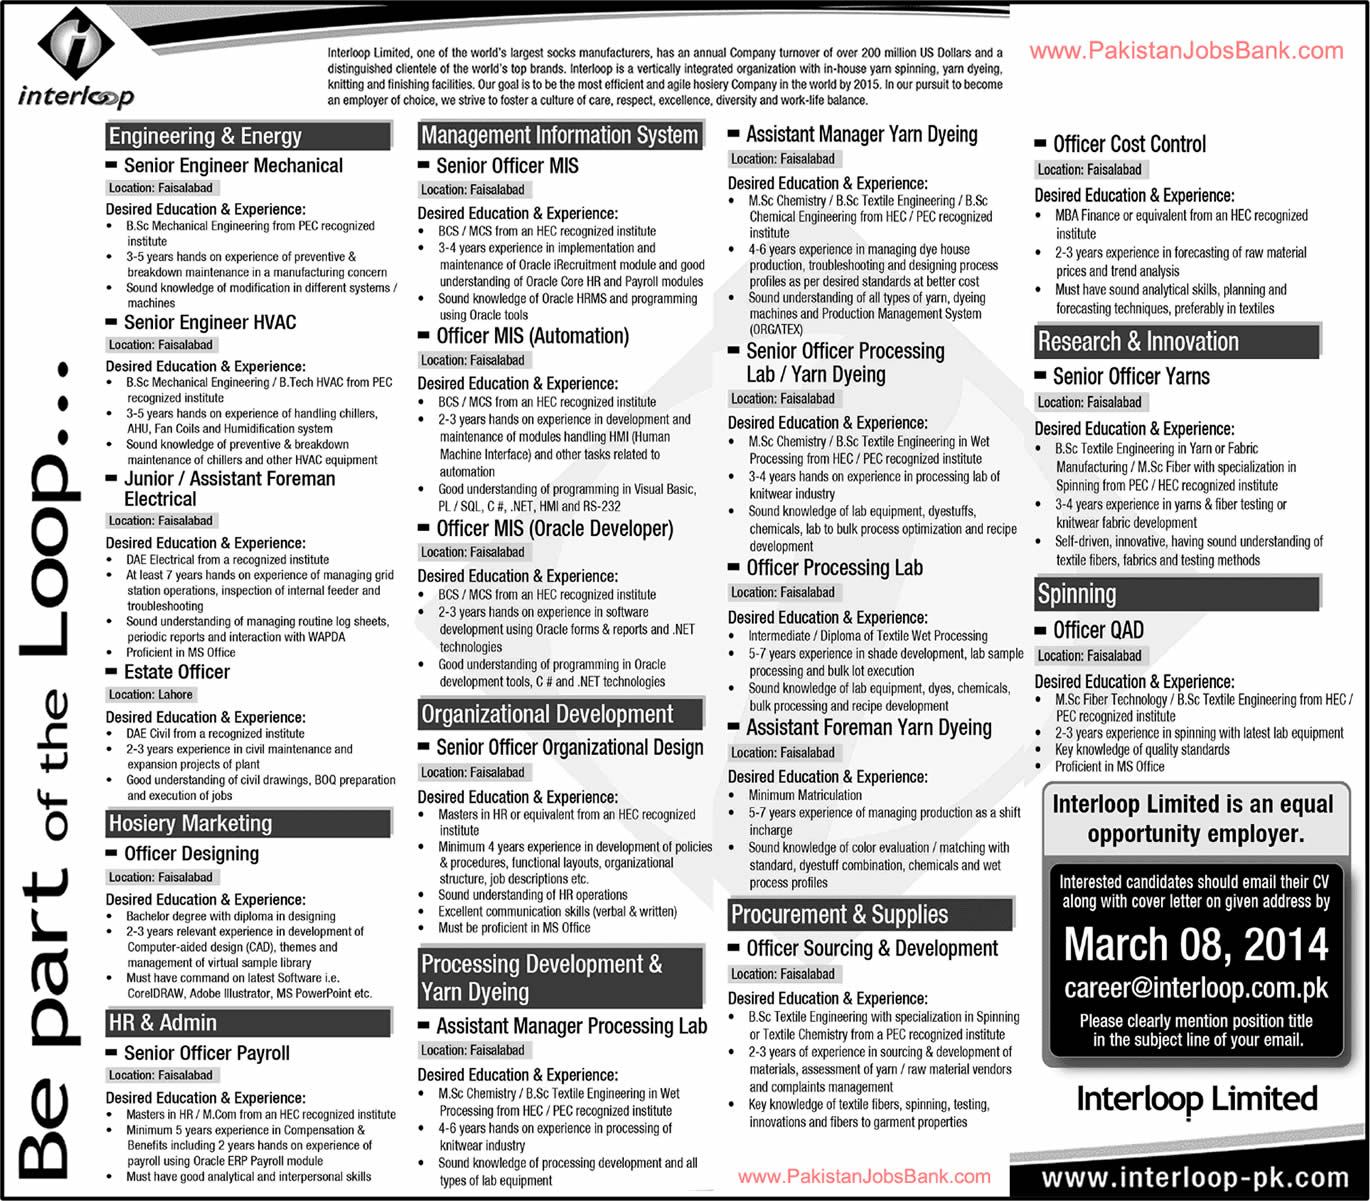 Interloop Faisalabad Jobs 2014 March